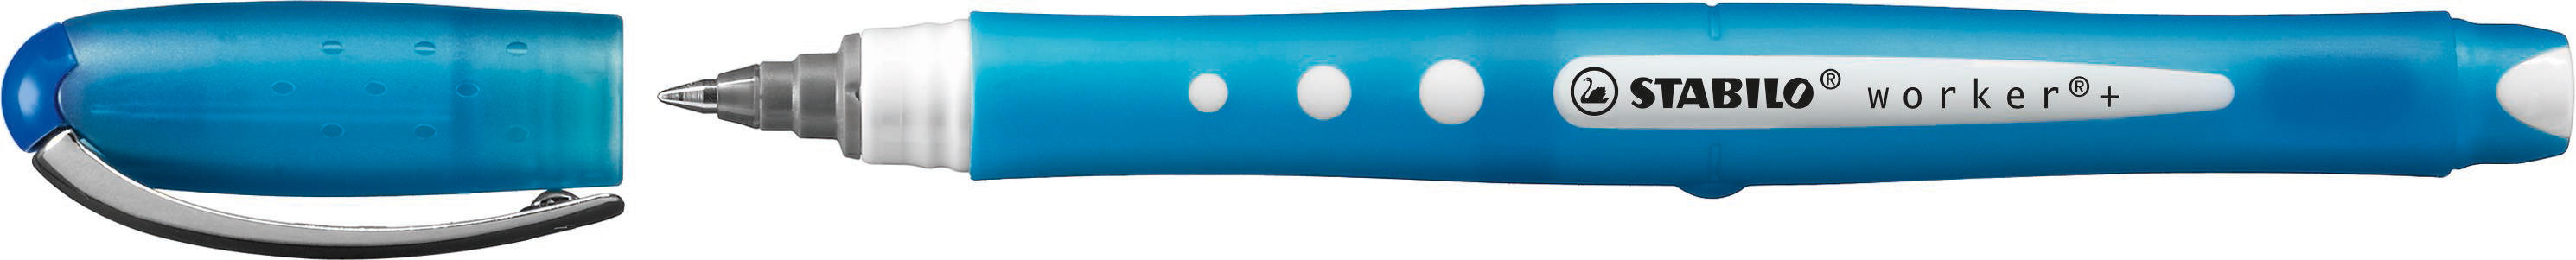 STABILO worker colorful roller 0.5mm 2019/41 bleu